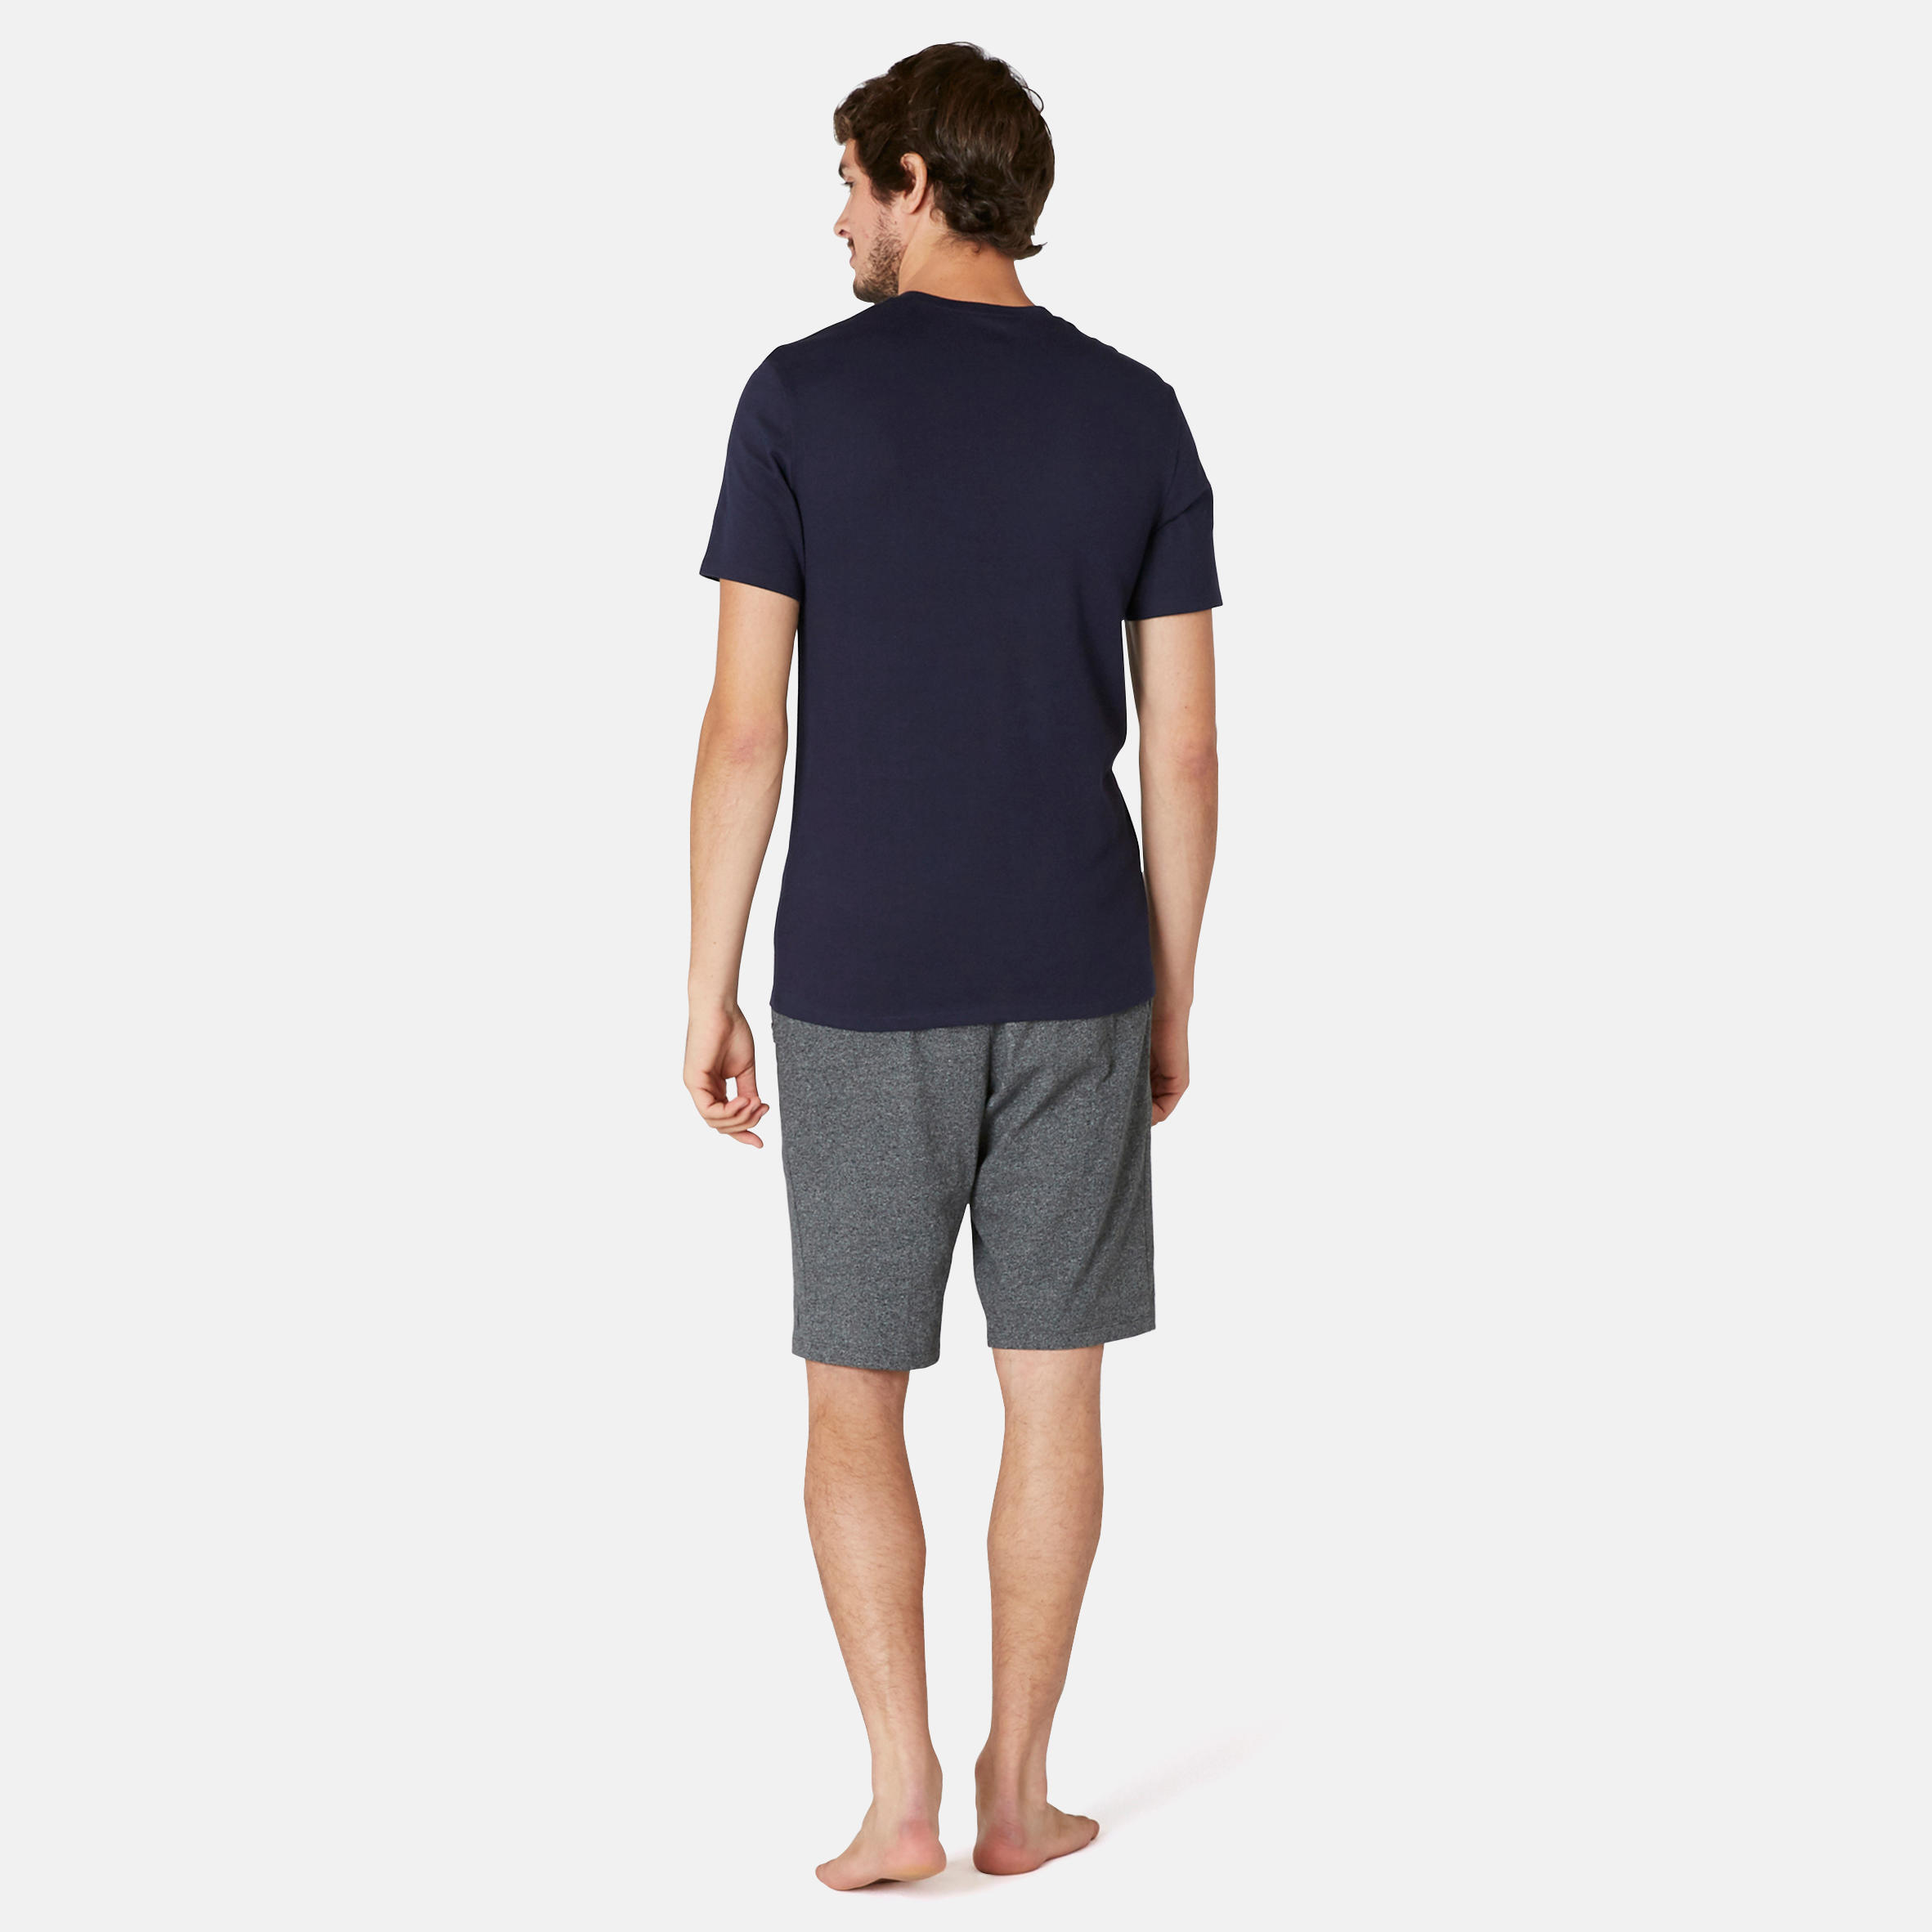 Men's Slim-Fit Fitness T-Shirt 500 - Dark Blue 6/8